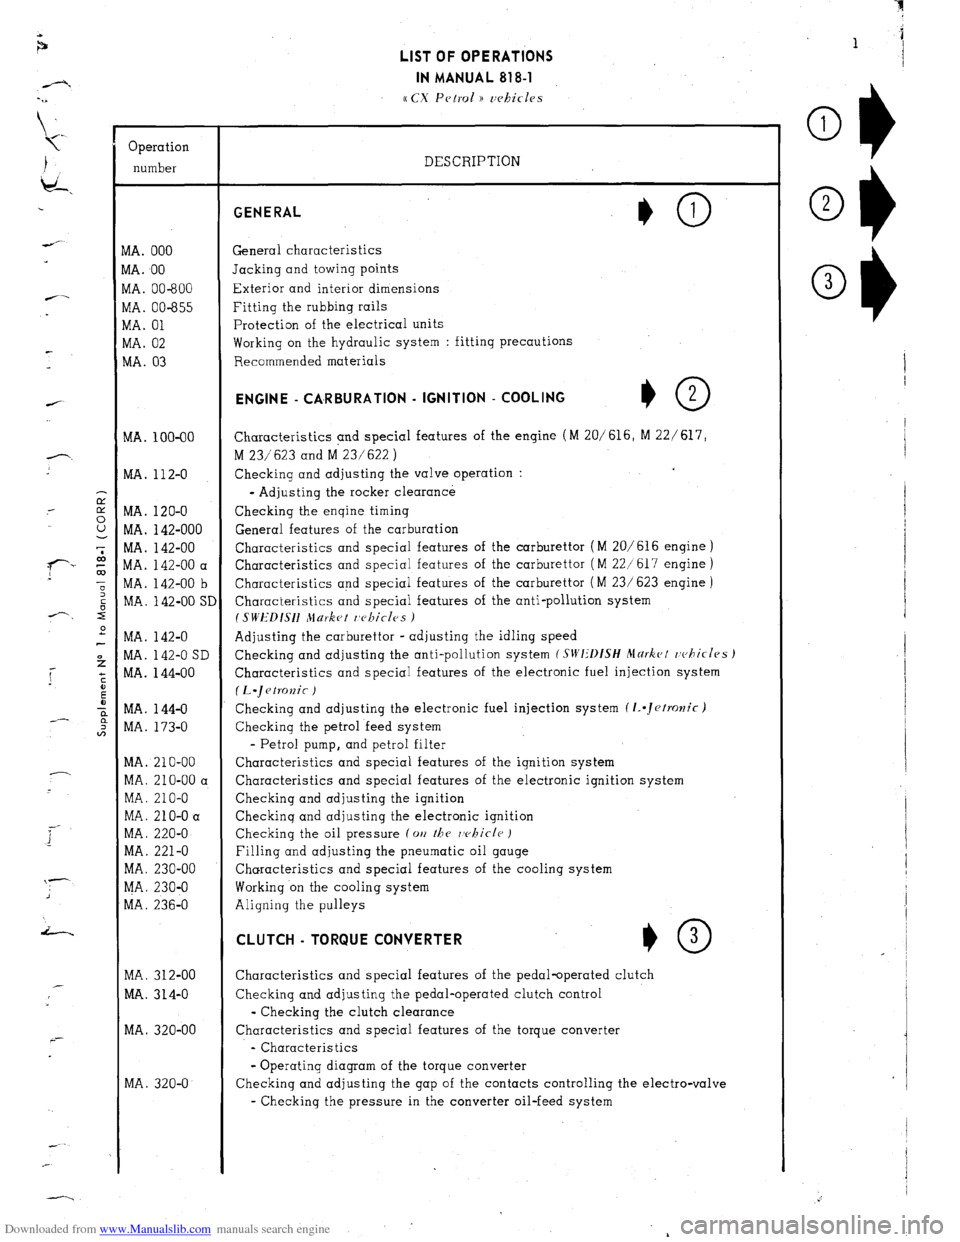 Citroen CX 1981 1.G Workshop Manual Downloaded from www.Manualslib.com manuals search engine Operation 
number 
VIA. 000 
VIA. 00 
VIA. 00-600 
vlA. 00-655 
VIA. 01 
WA. 02 
MA. 03 
MA. 100-00 
MA. 112-O 
MA. 120-O 
MA. 142-000 
MA. 142